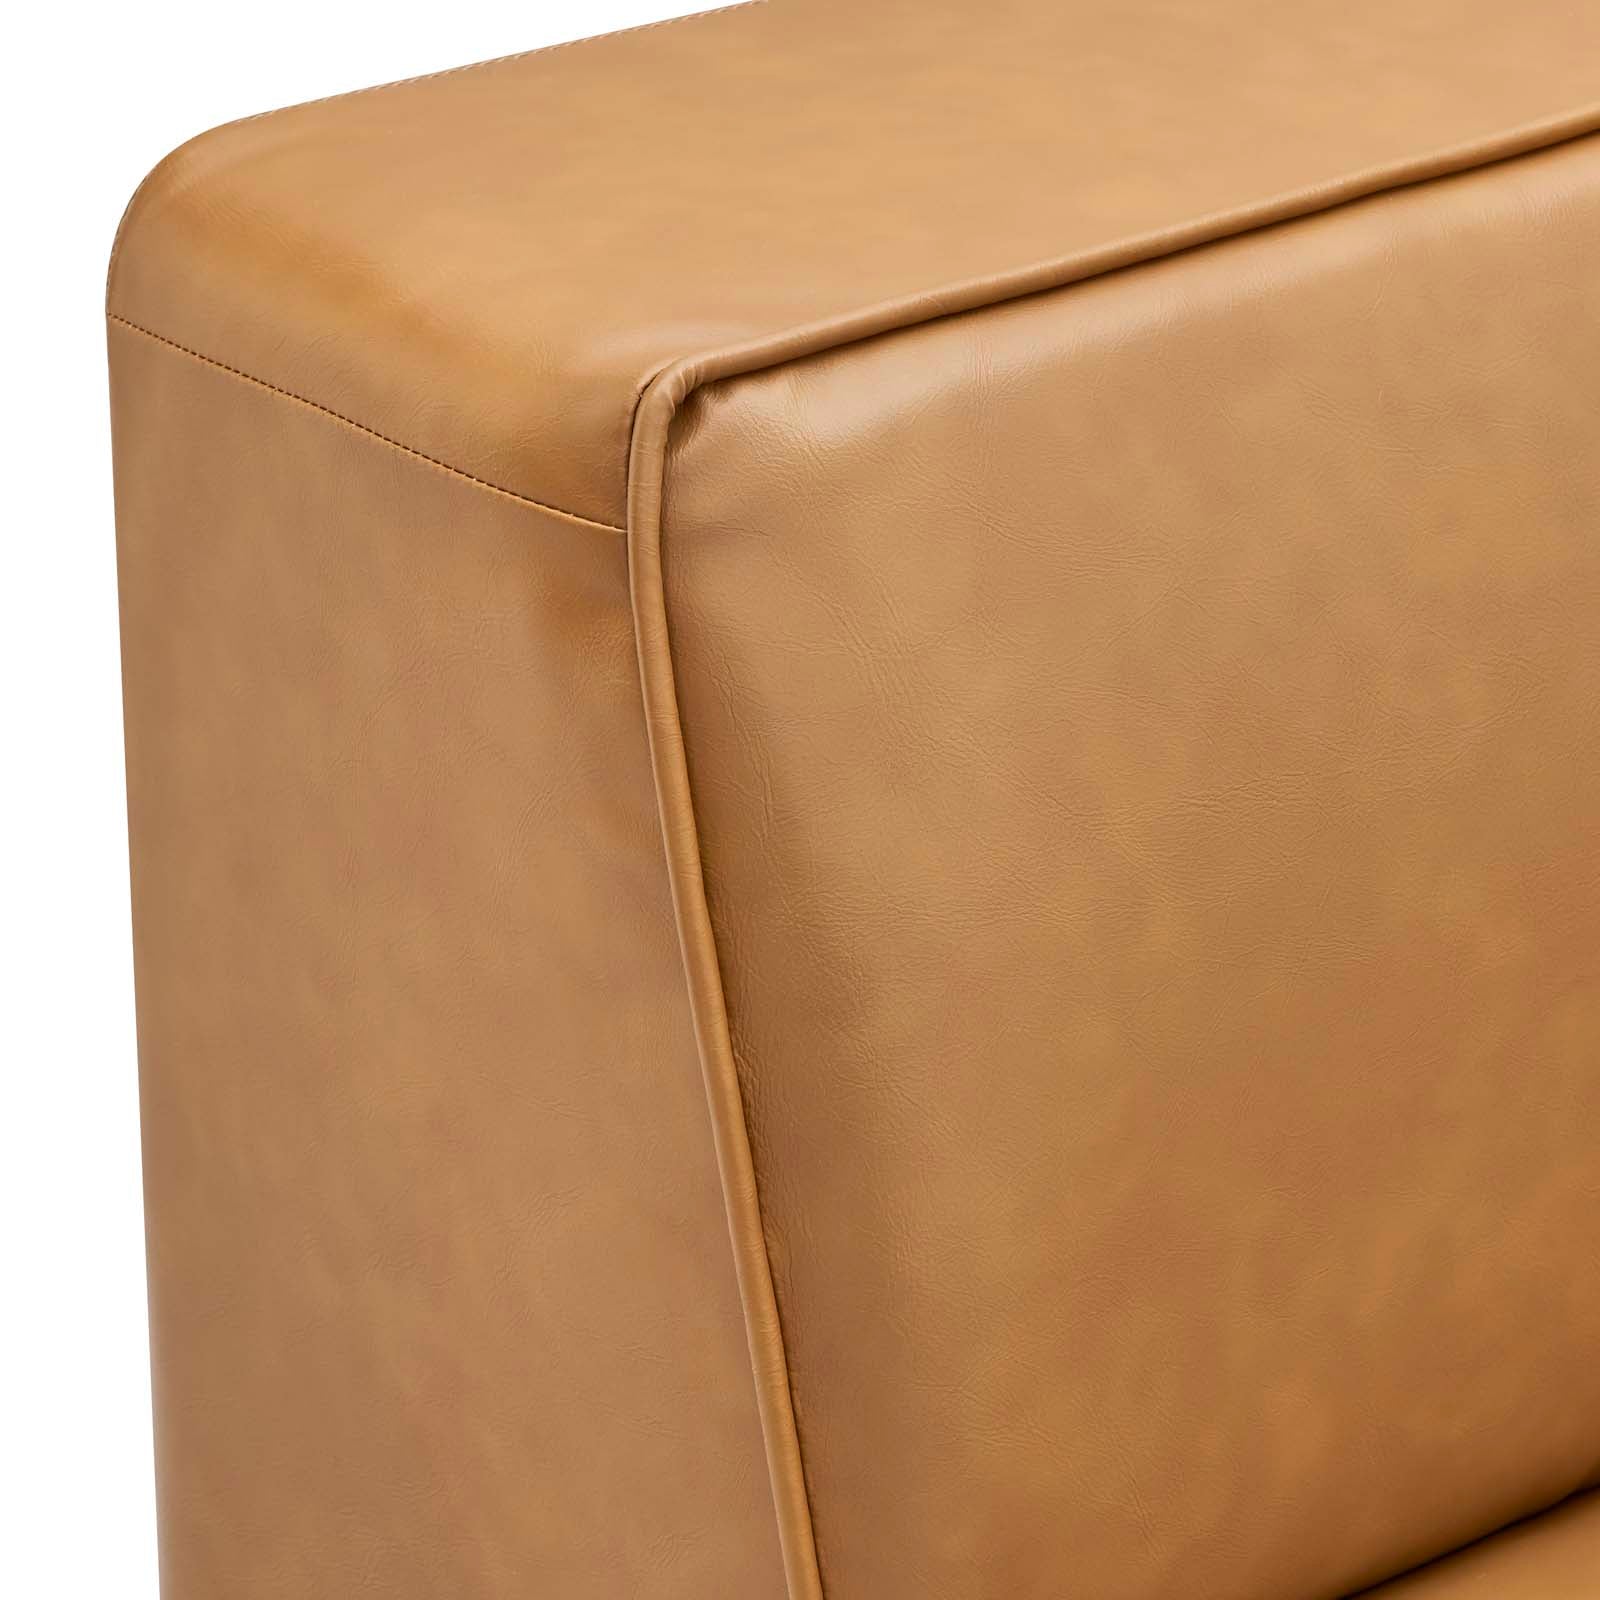 Modway Chairs - Mingle Vegan Leather Corner Chair Tan